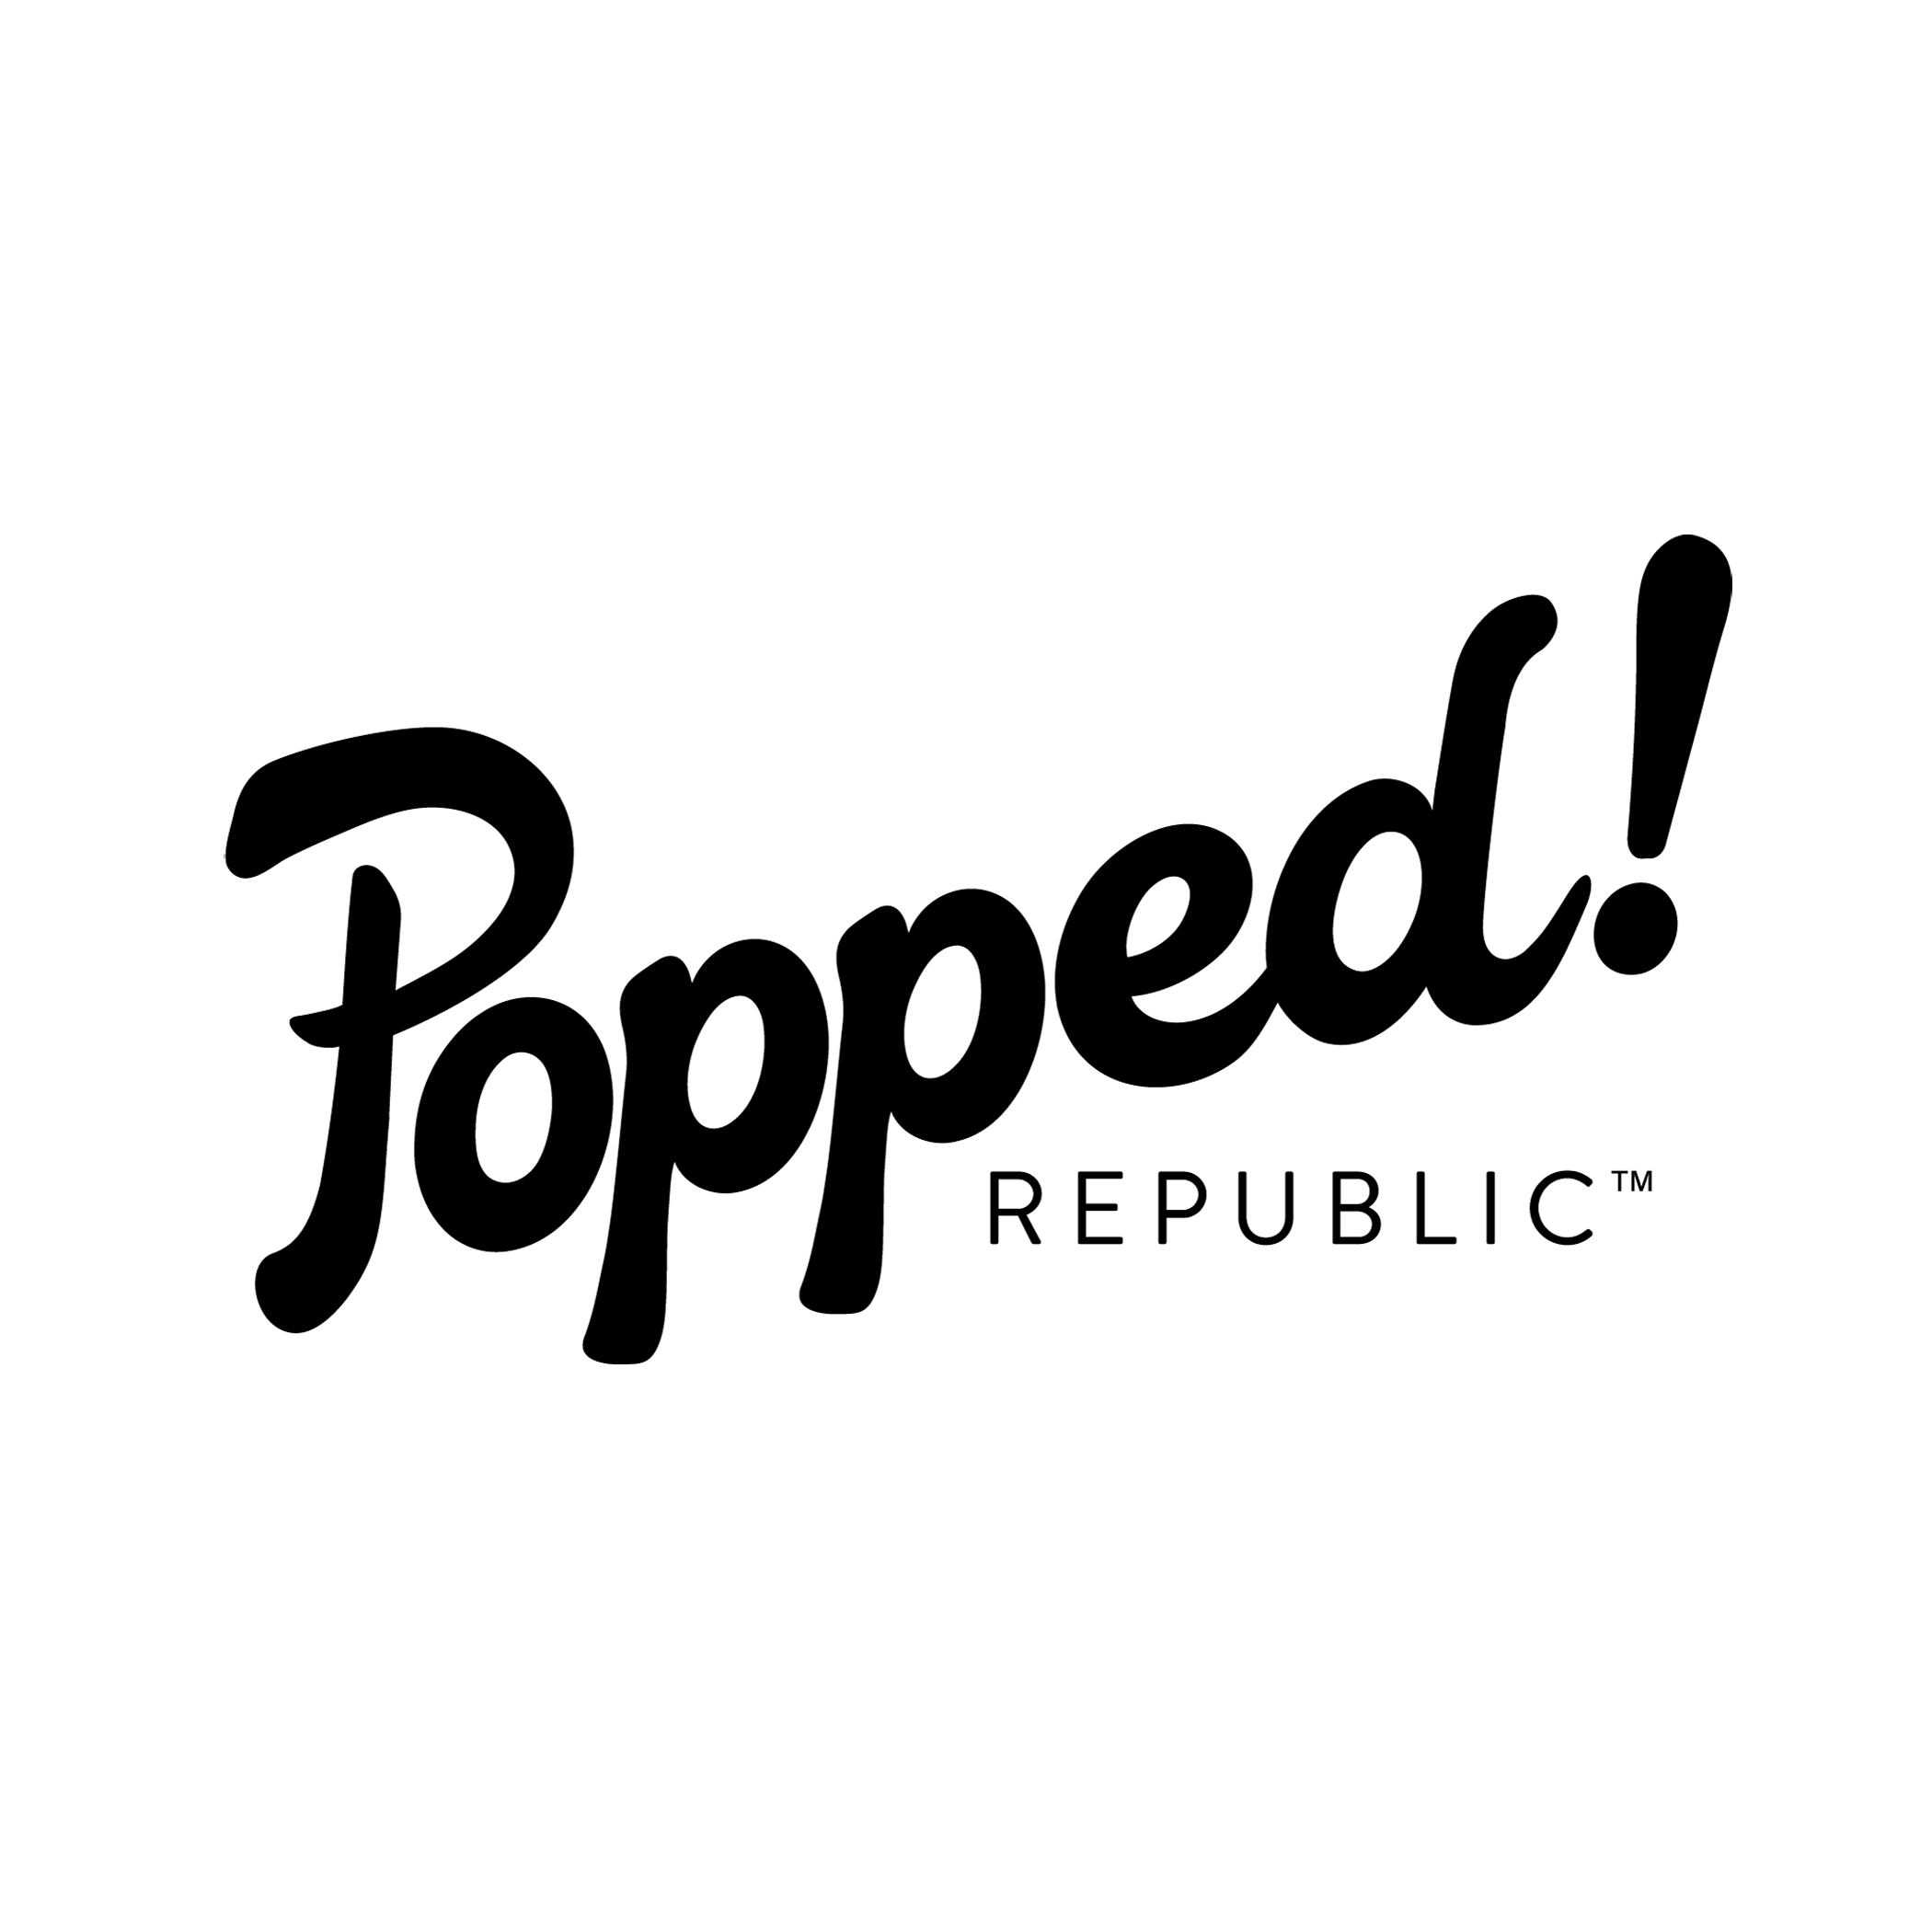 Popped Republic Logo